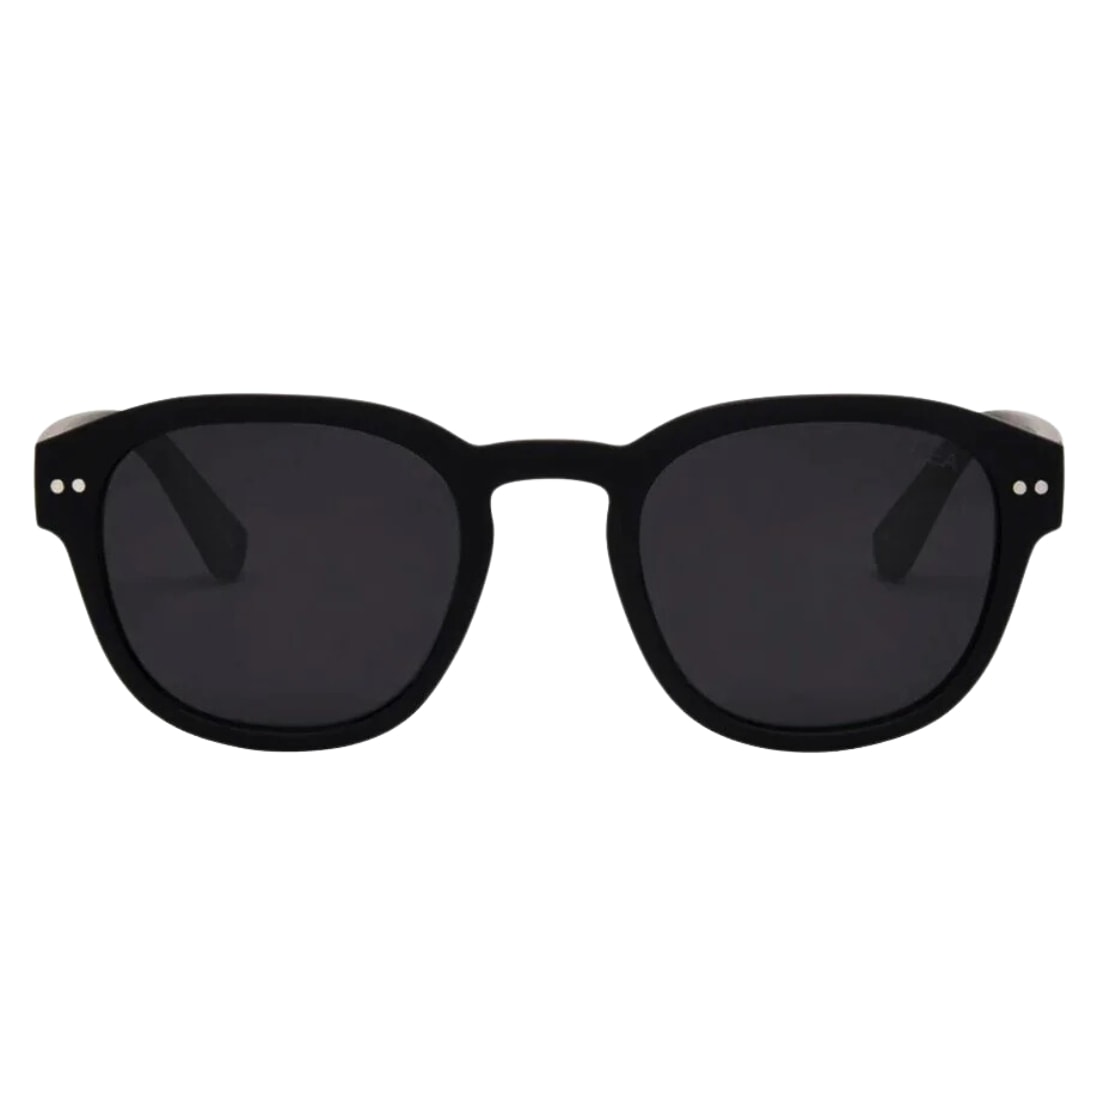 I-Sea Barton Round Polarised Sunglasses - Matt Black/Smoke Polarized Lens - Round Sunglasses by I-Sea